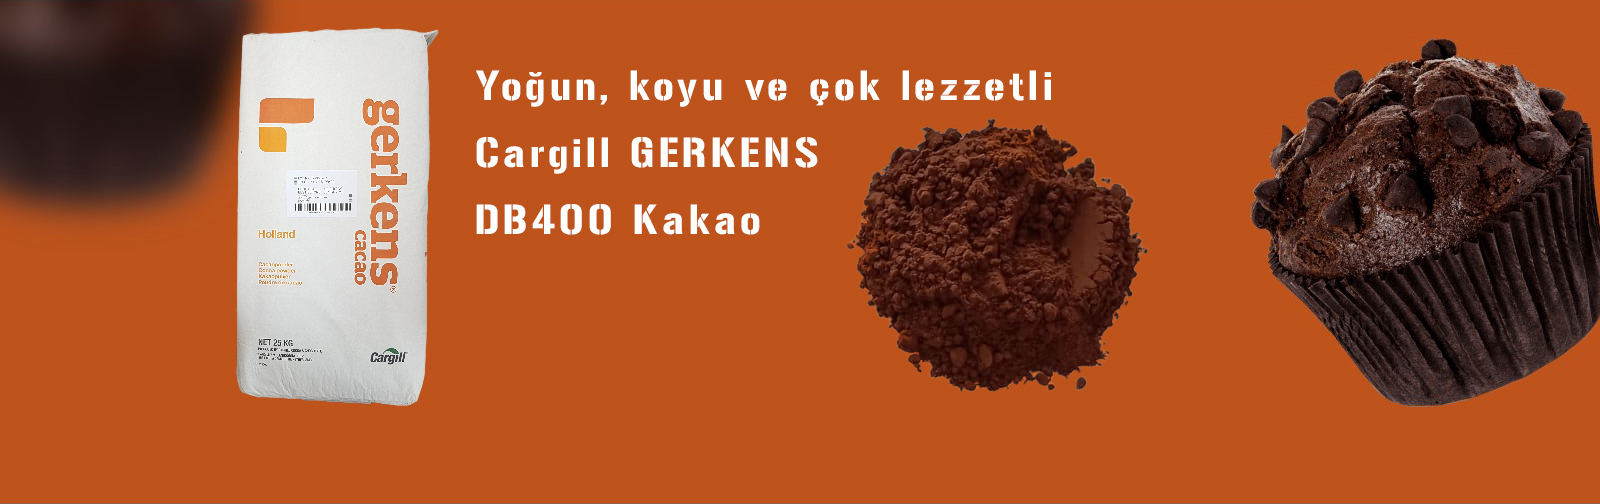 Cargill Gerkens DB400 Kakao